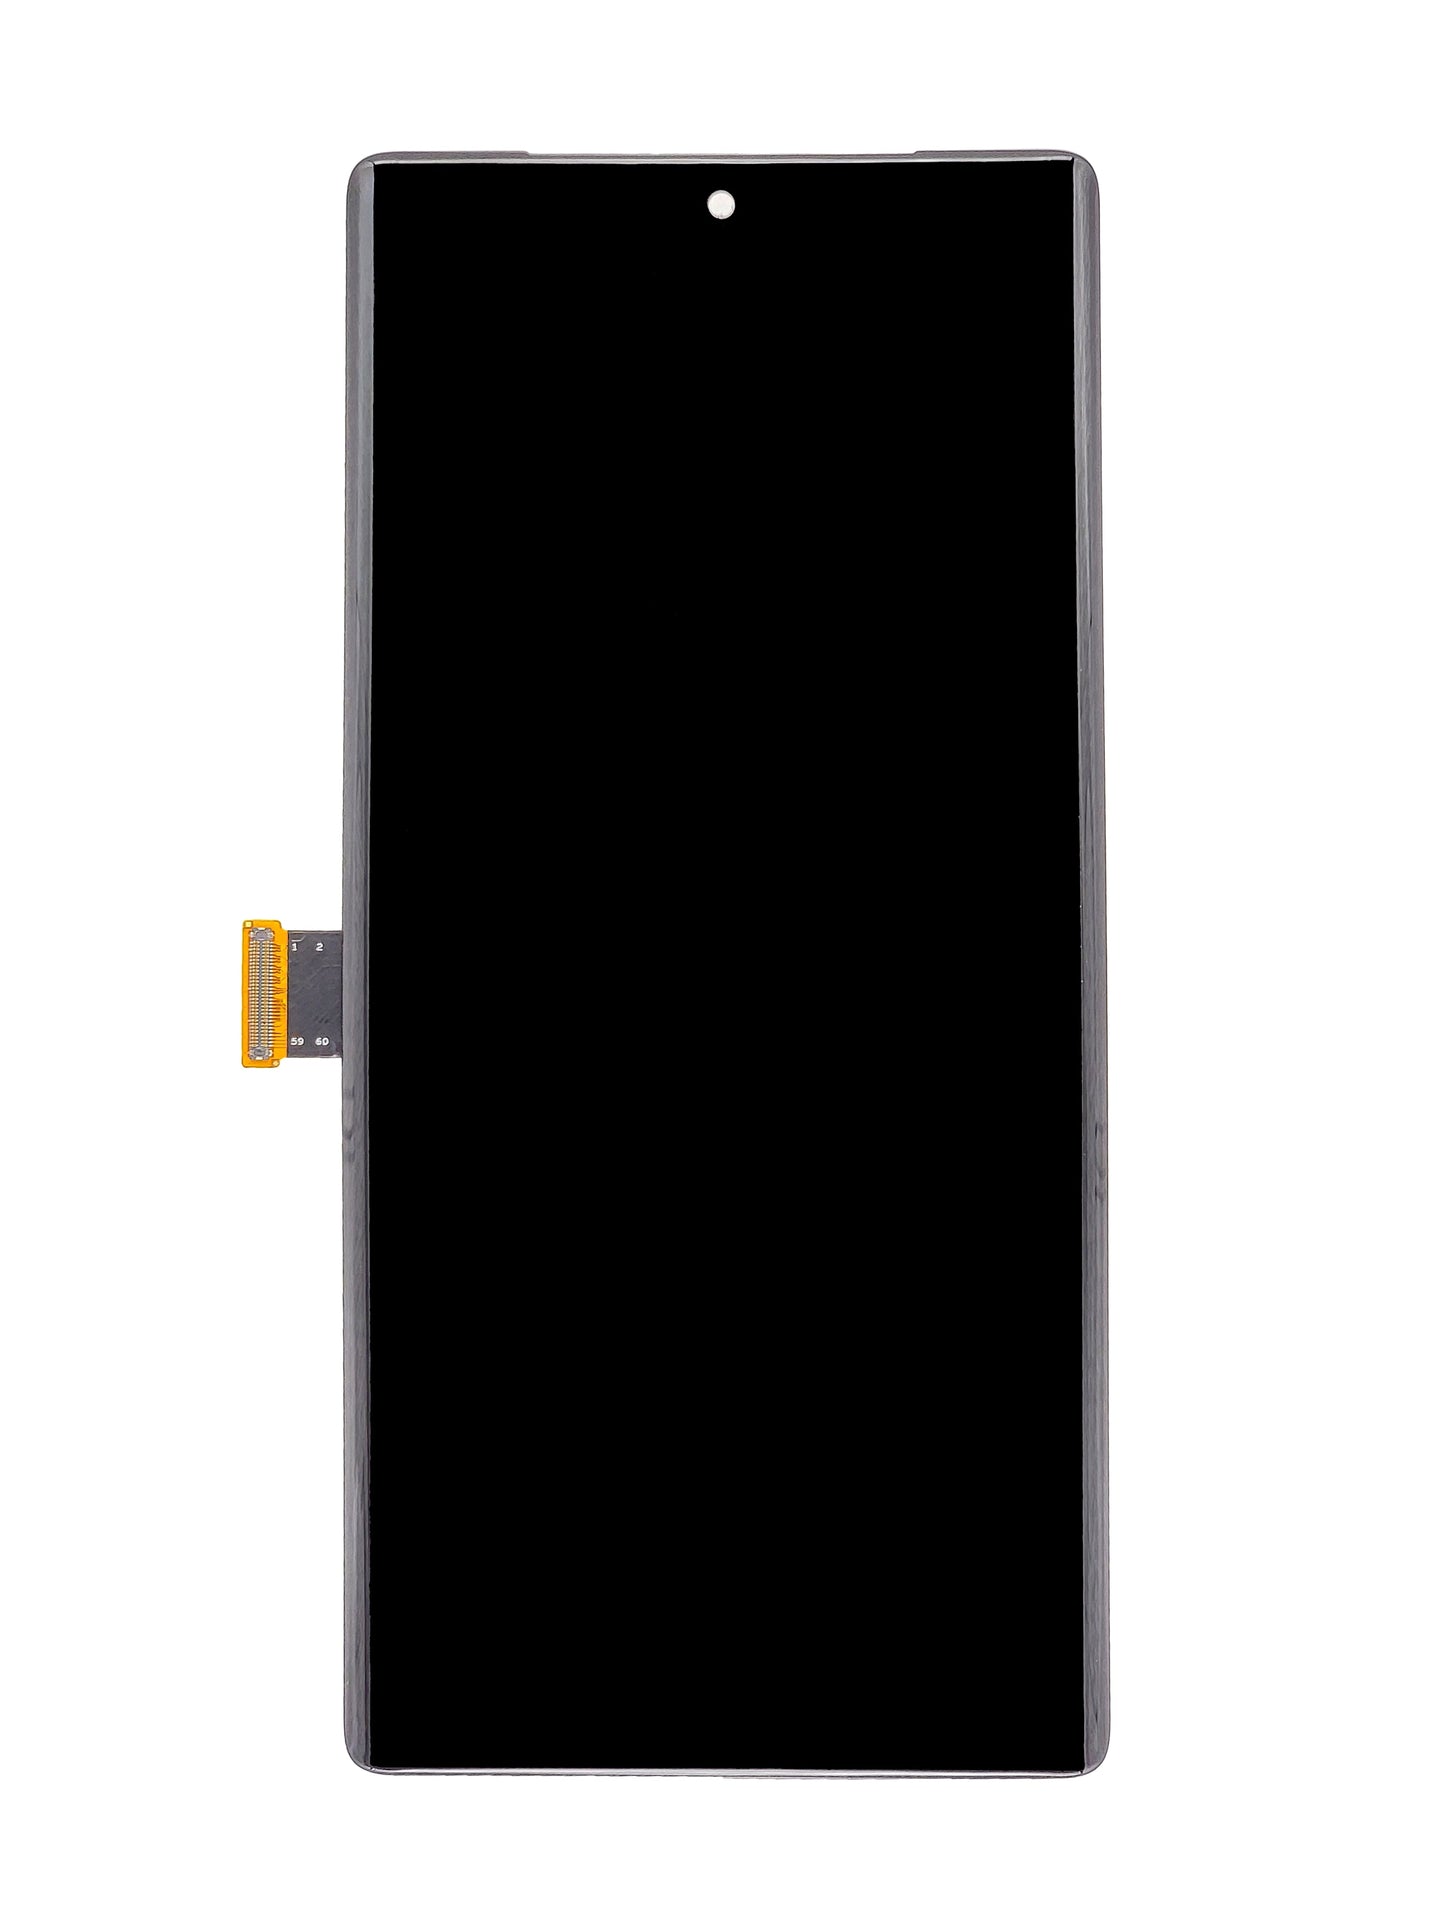 GOP Pixel 6 Pro Screen Assembly (With The Frame)(With Finger Print Sensor)(Refurbished) (Black)